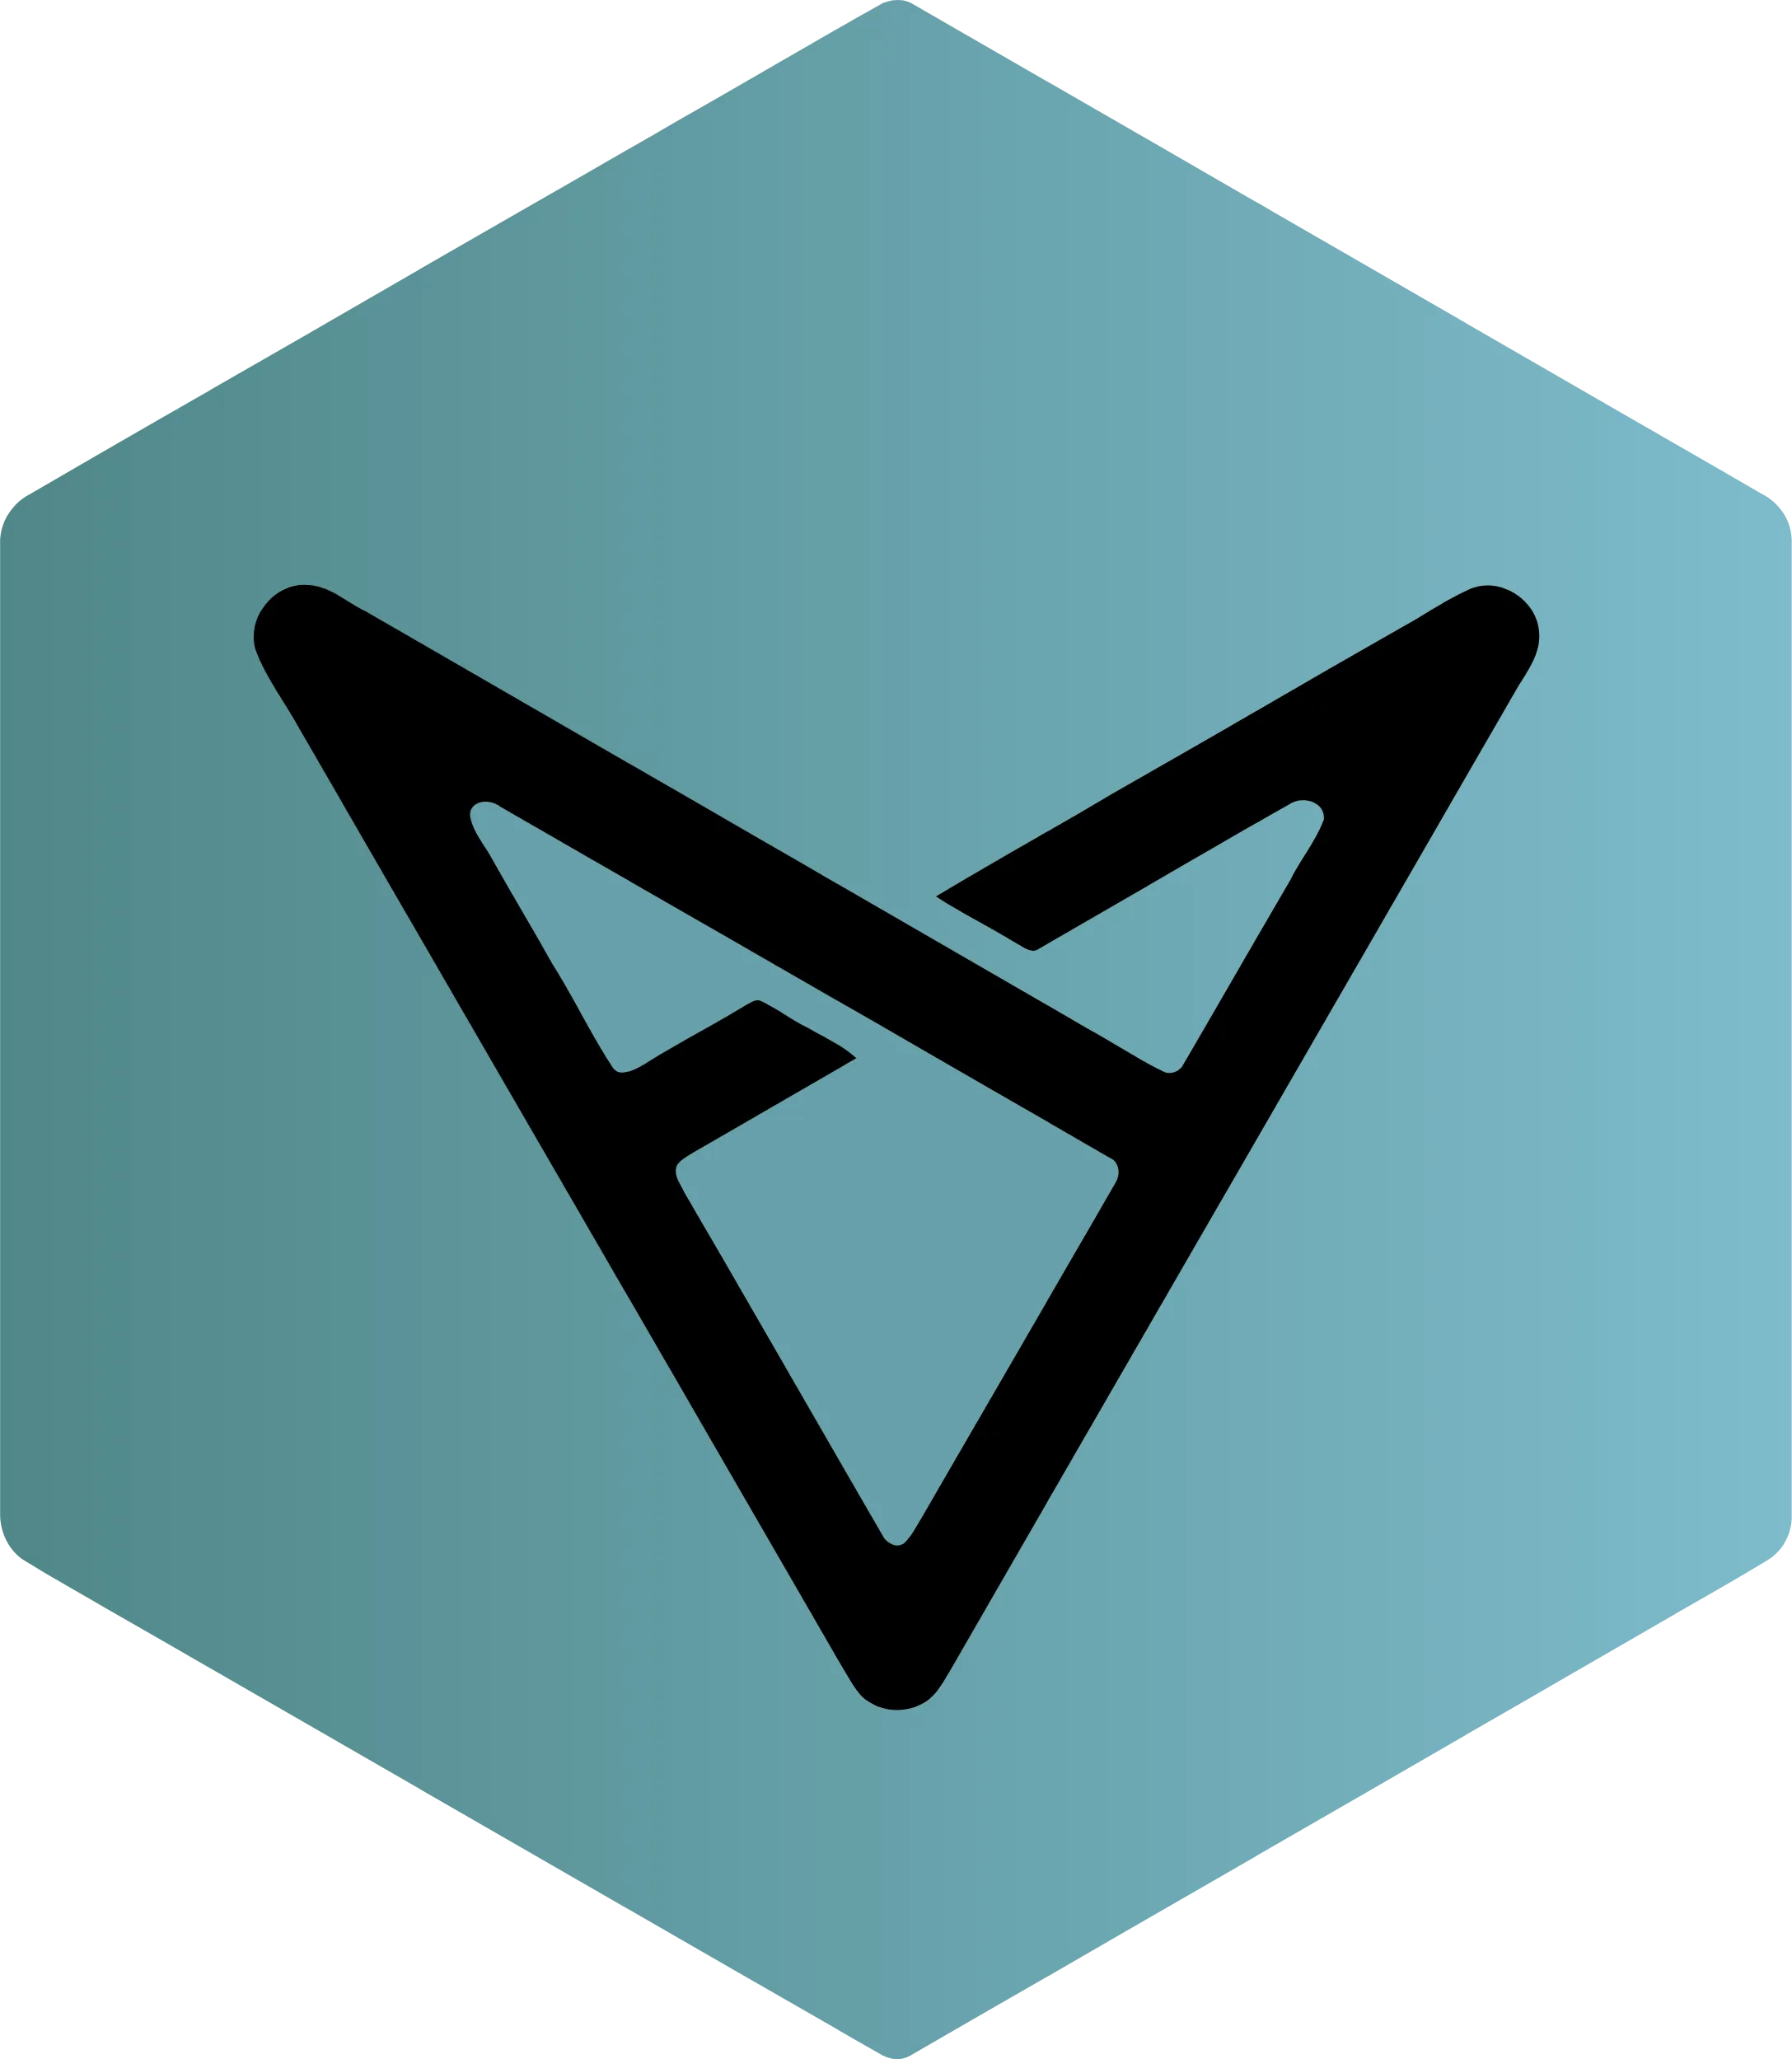 Vectorspace AI logo in svg format